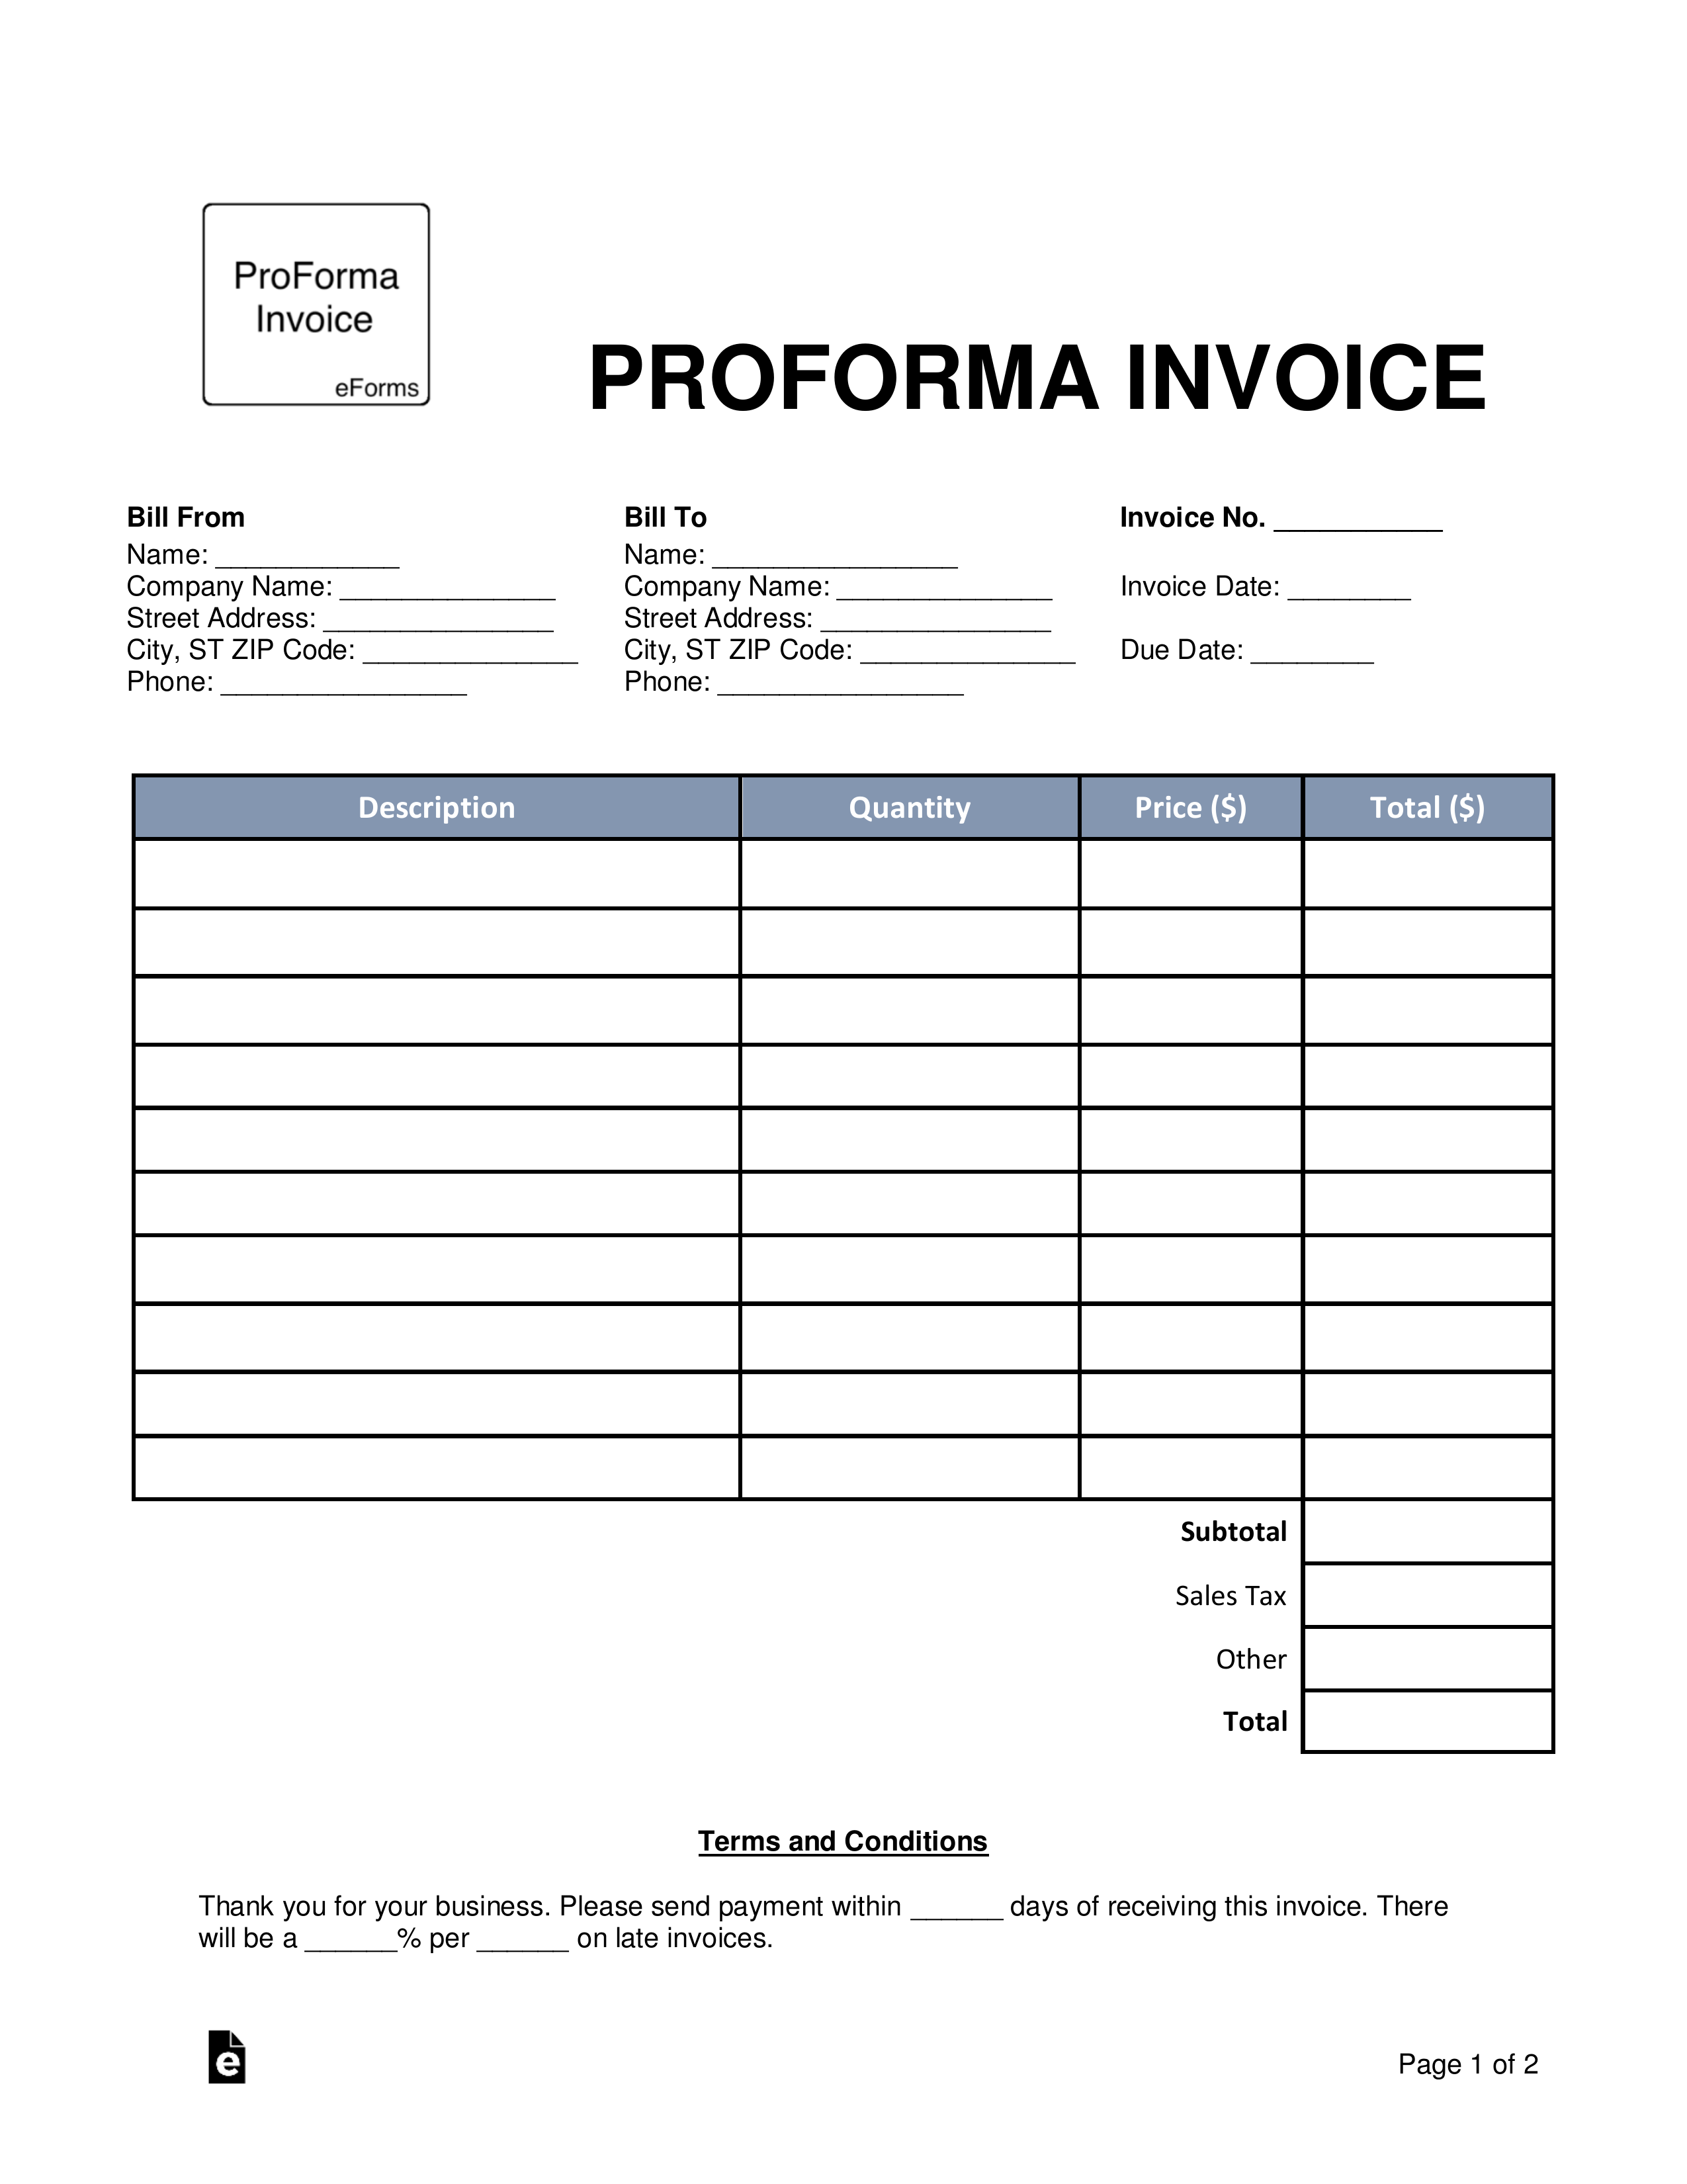 ProForma Invoice Template